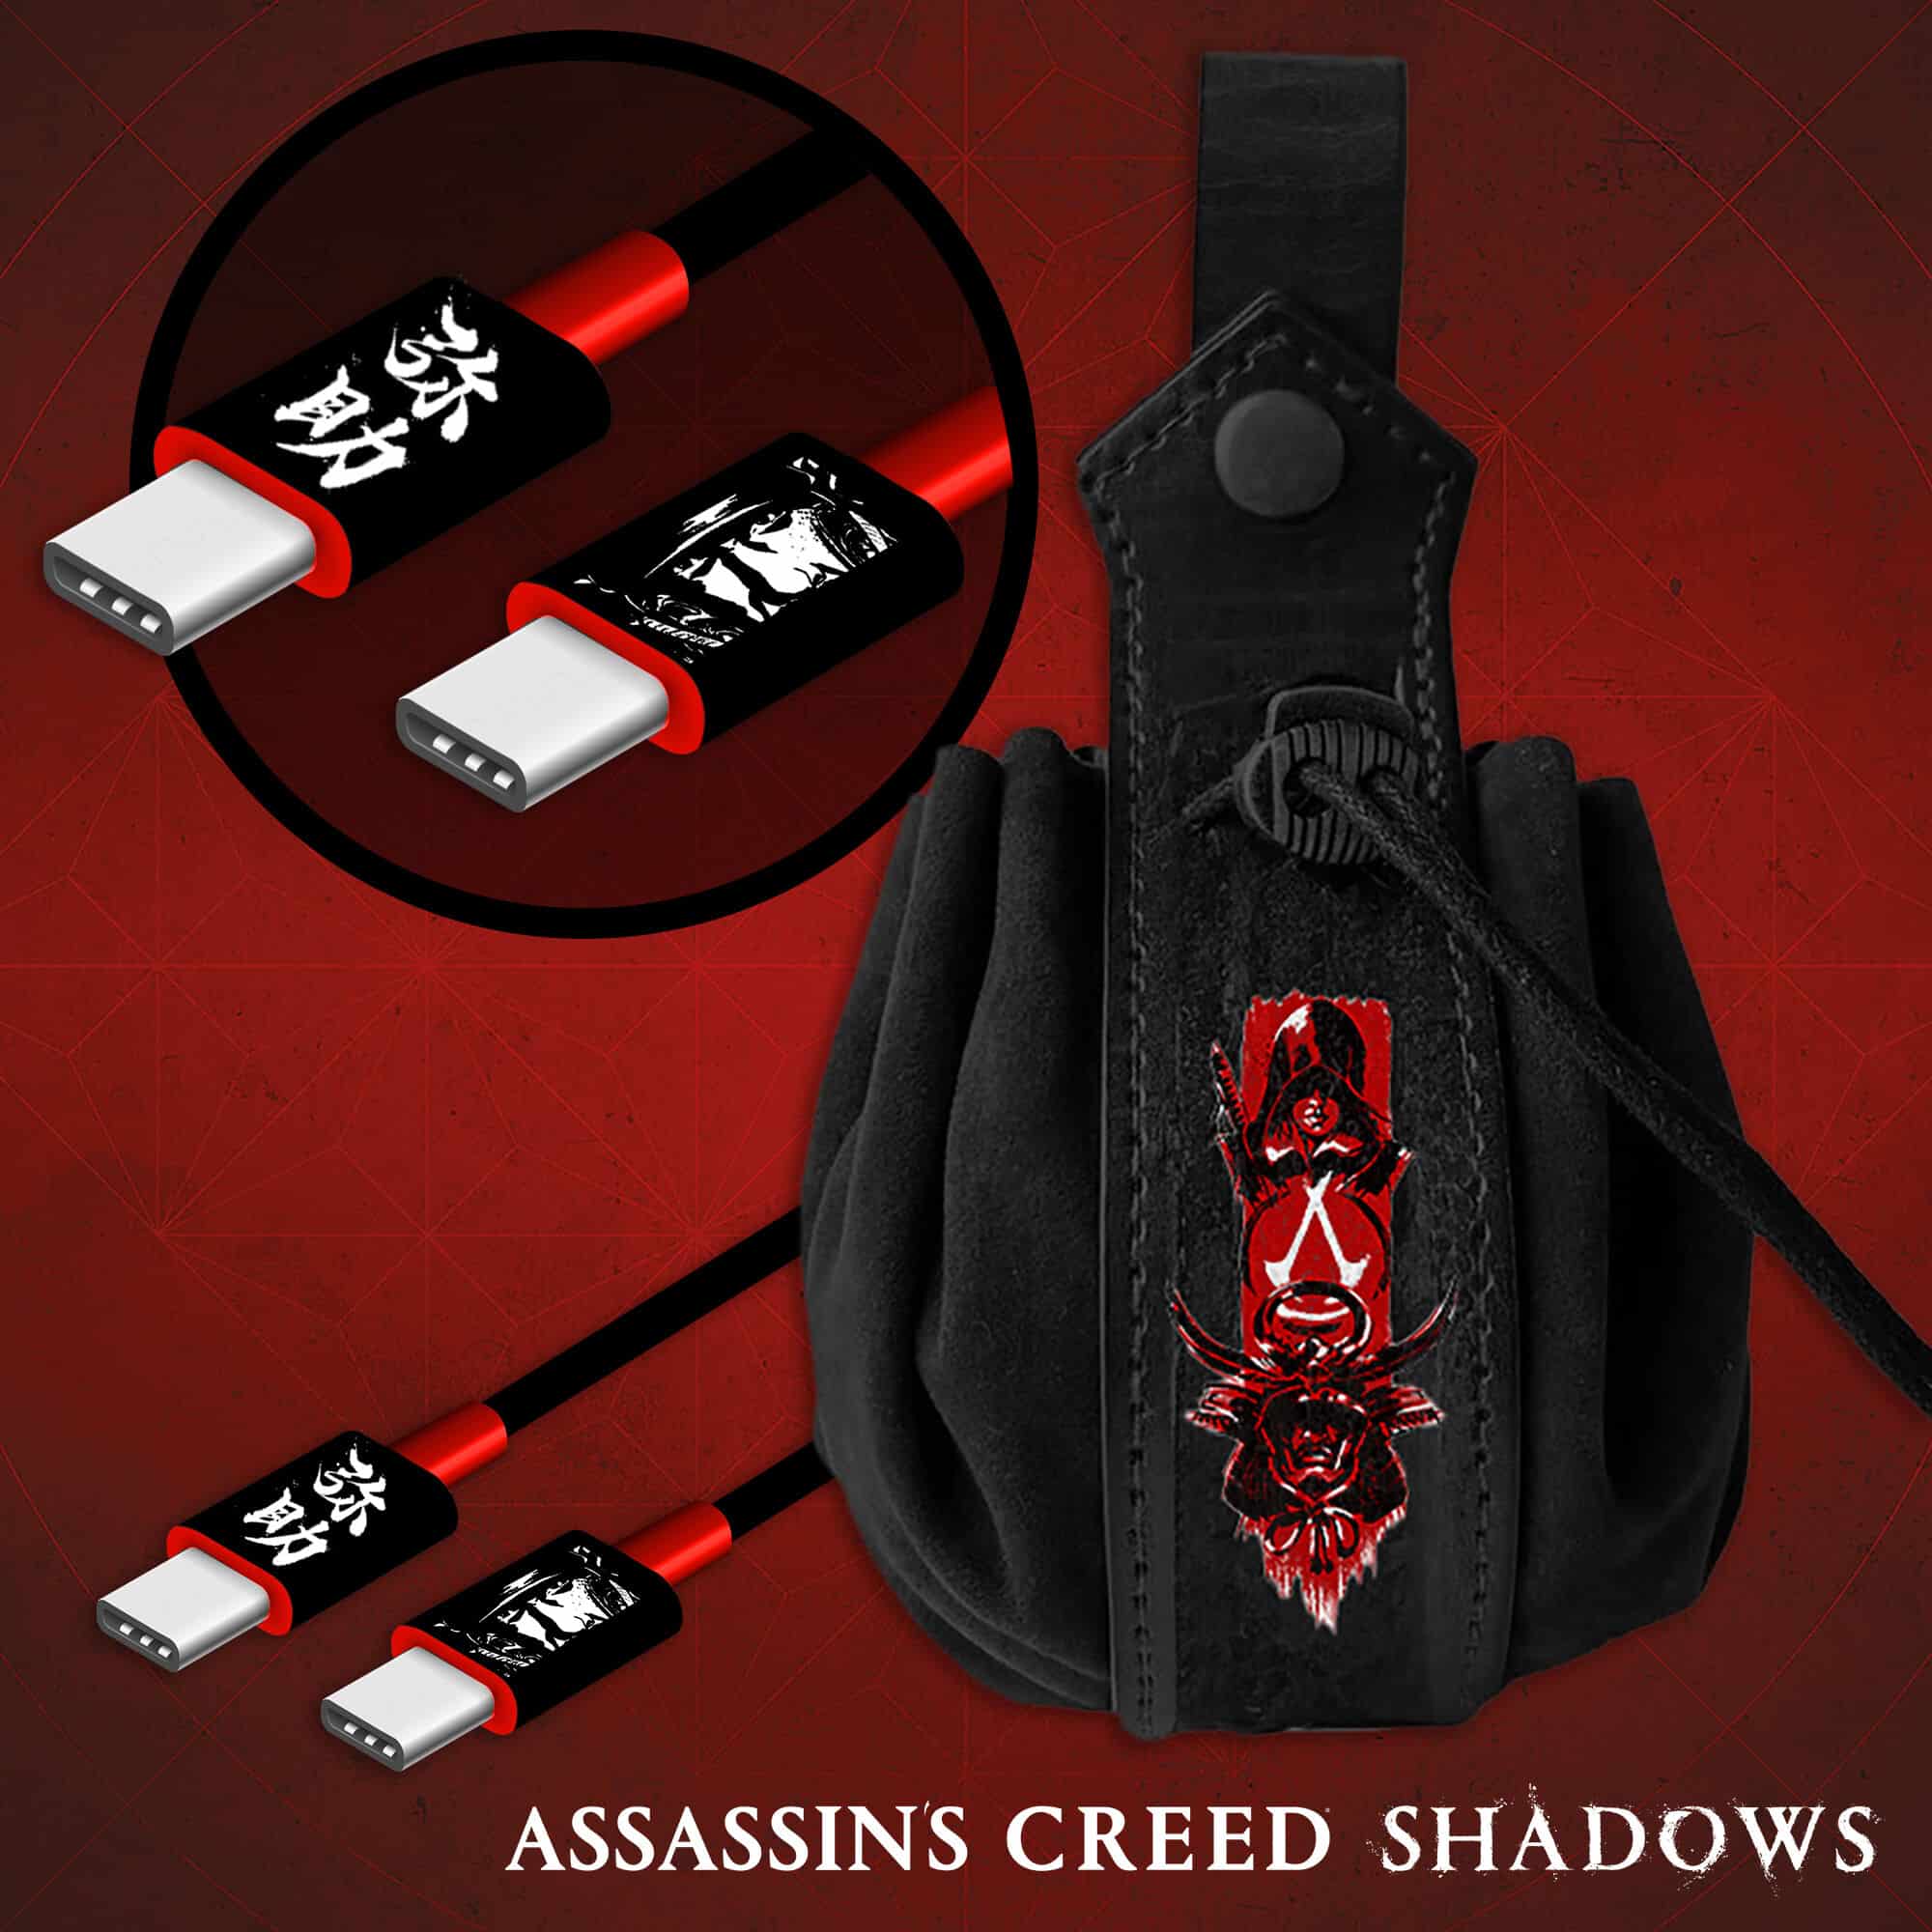 Assassins creed shadows goodies 1 5